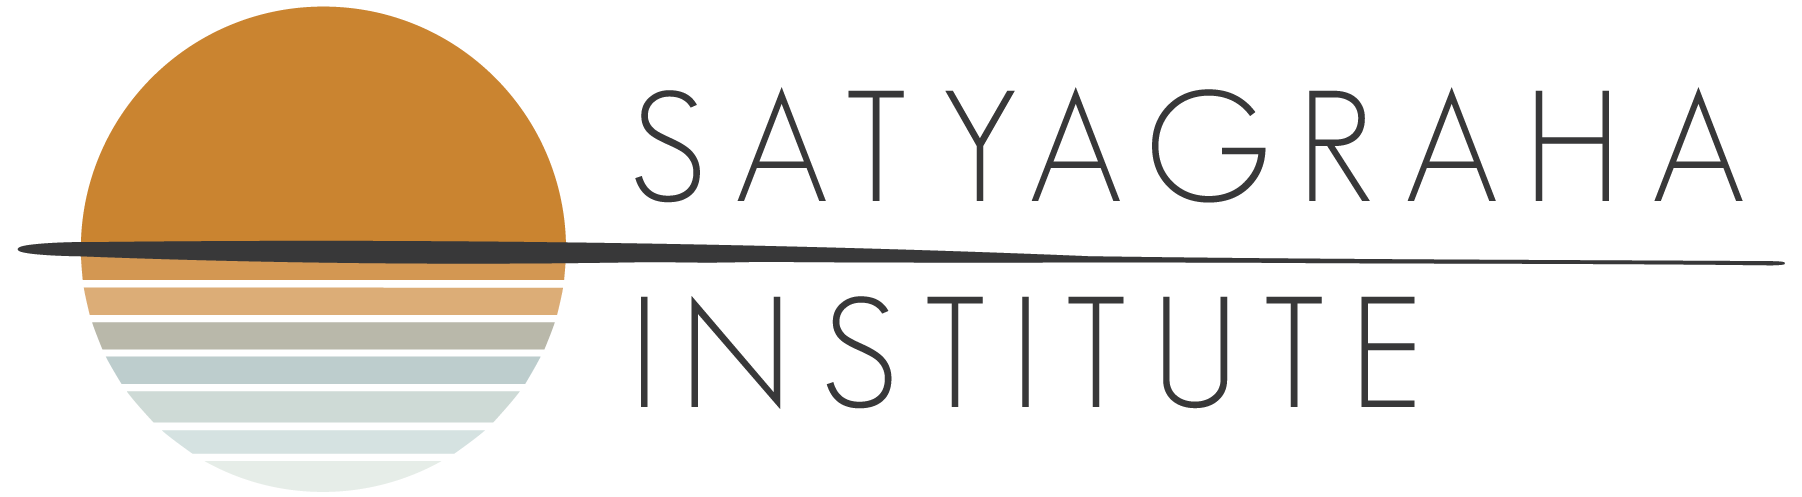 Satyagraha Institute logo